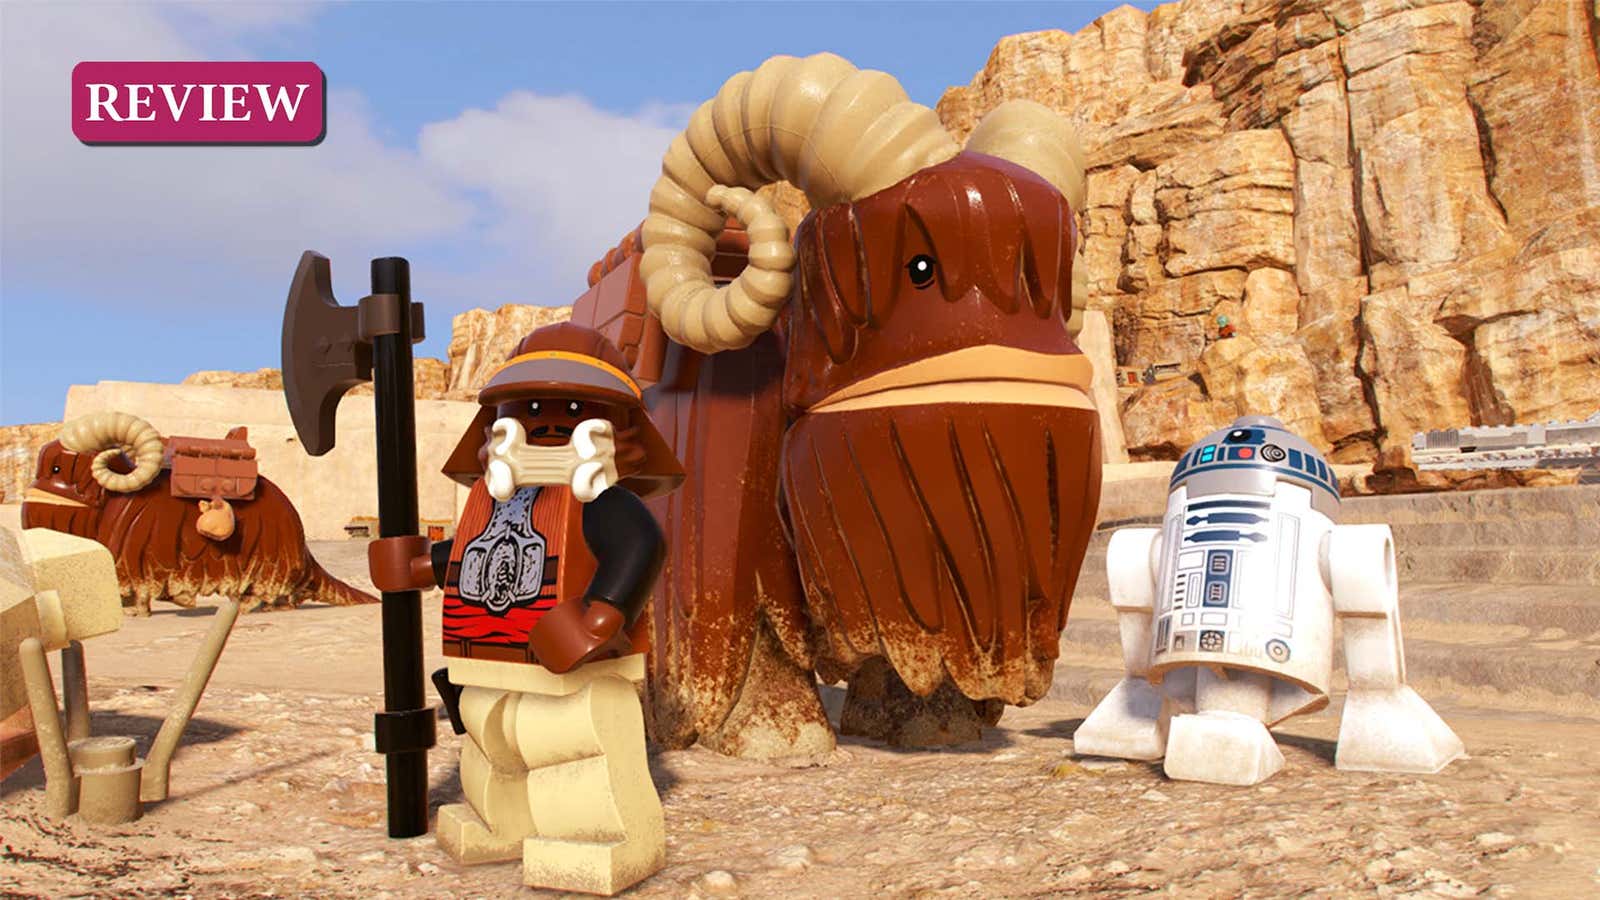 Lego Star Wars: A Saga Skywalker para PS4 - Tt Games